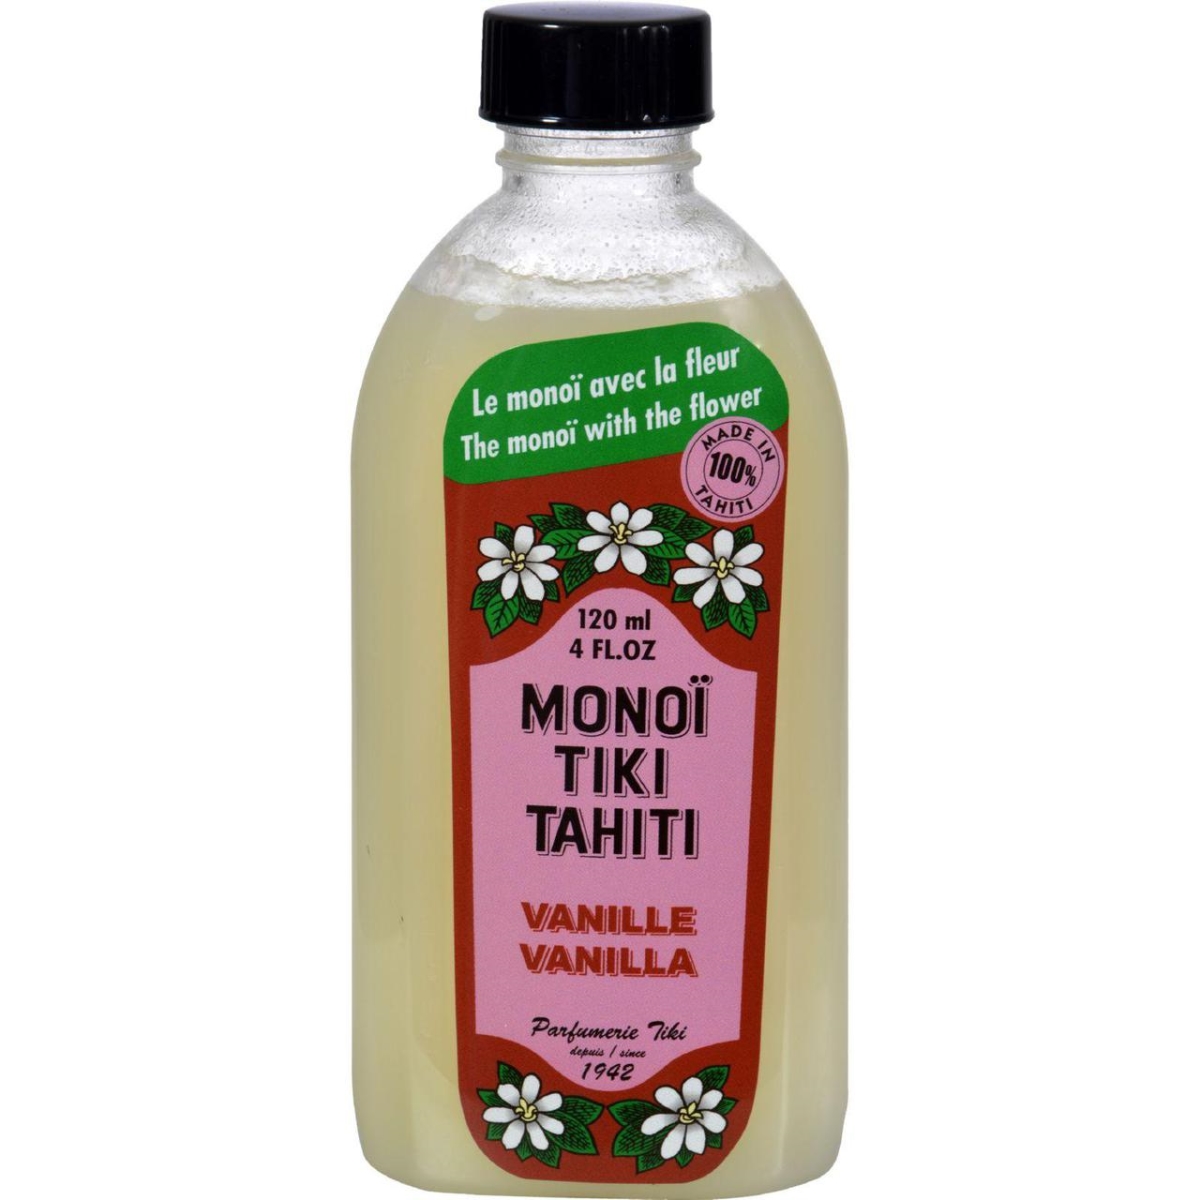 Hg0685255 4 Fl Oz Tiare Tahiti Coconut Oil, Vanilla